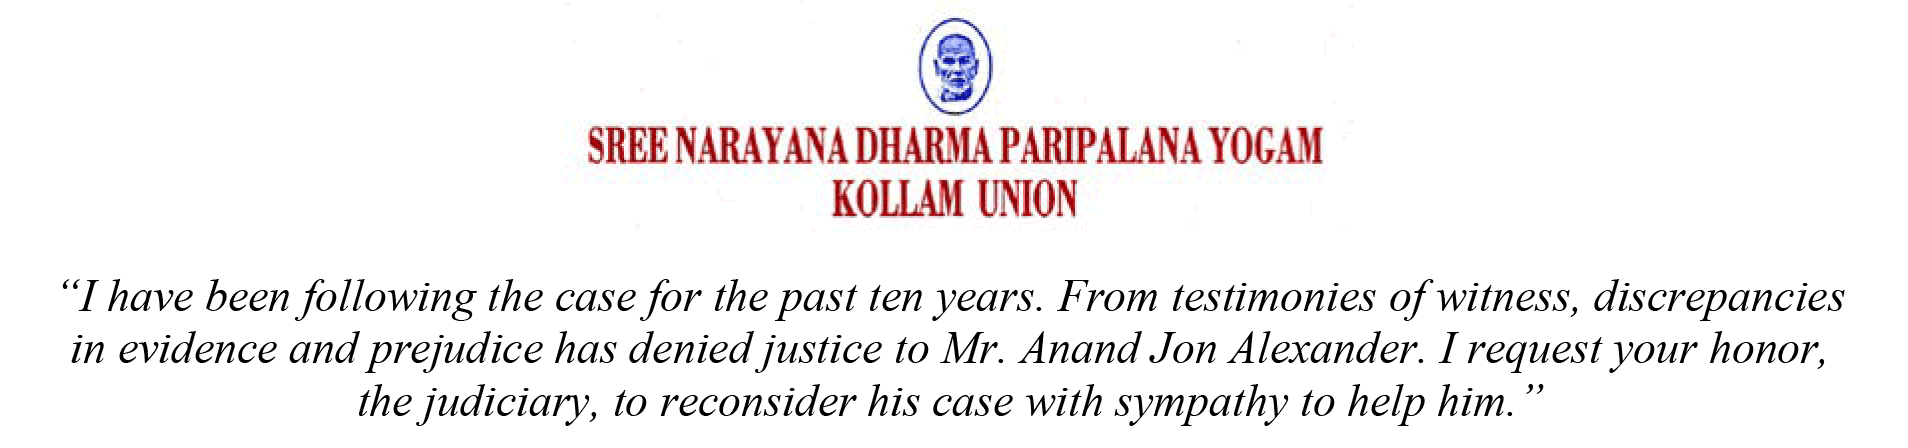 Sree Narayana Dharma Paripalana Yogam Kollam Union